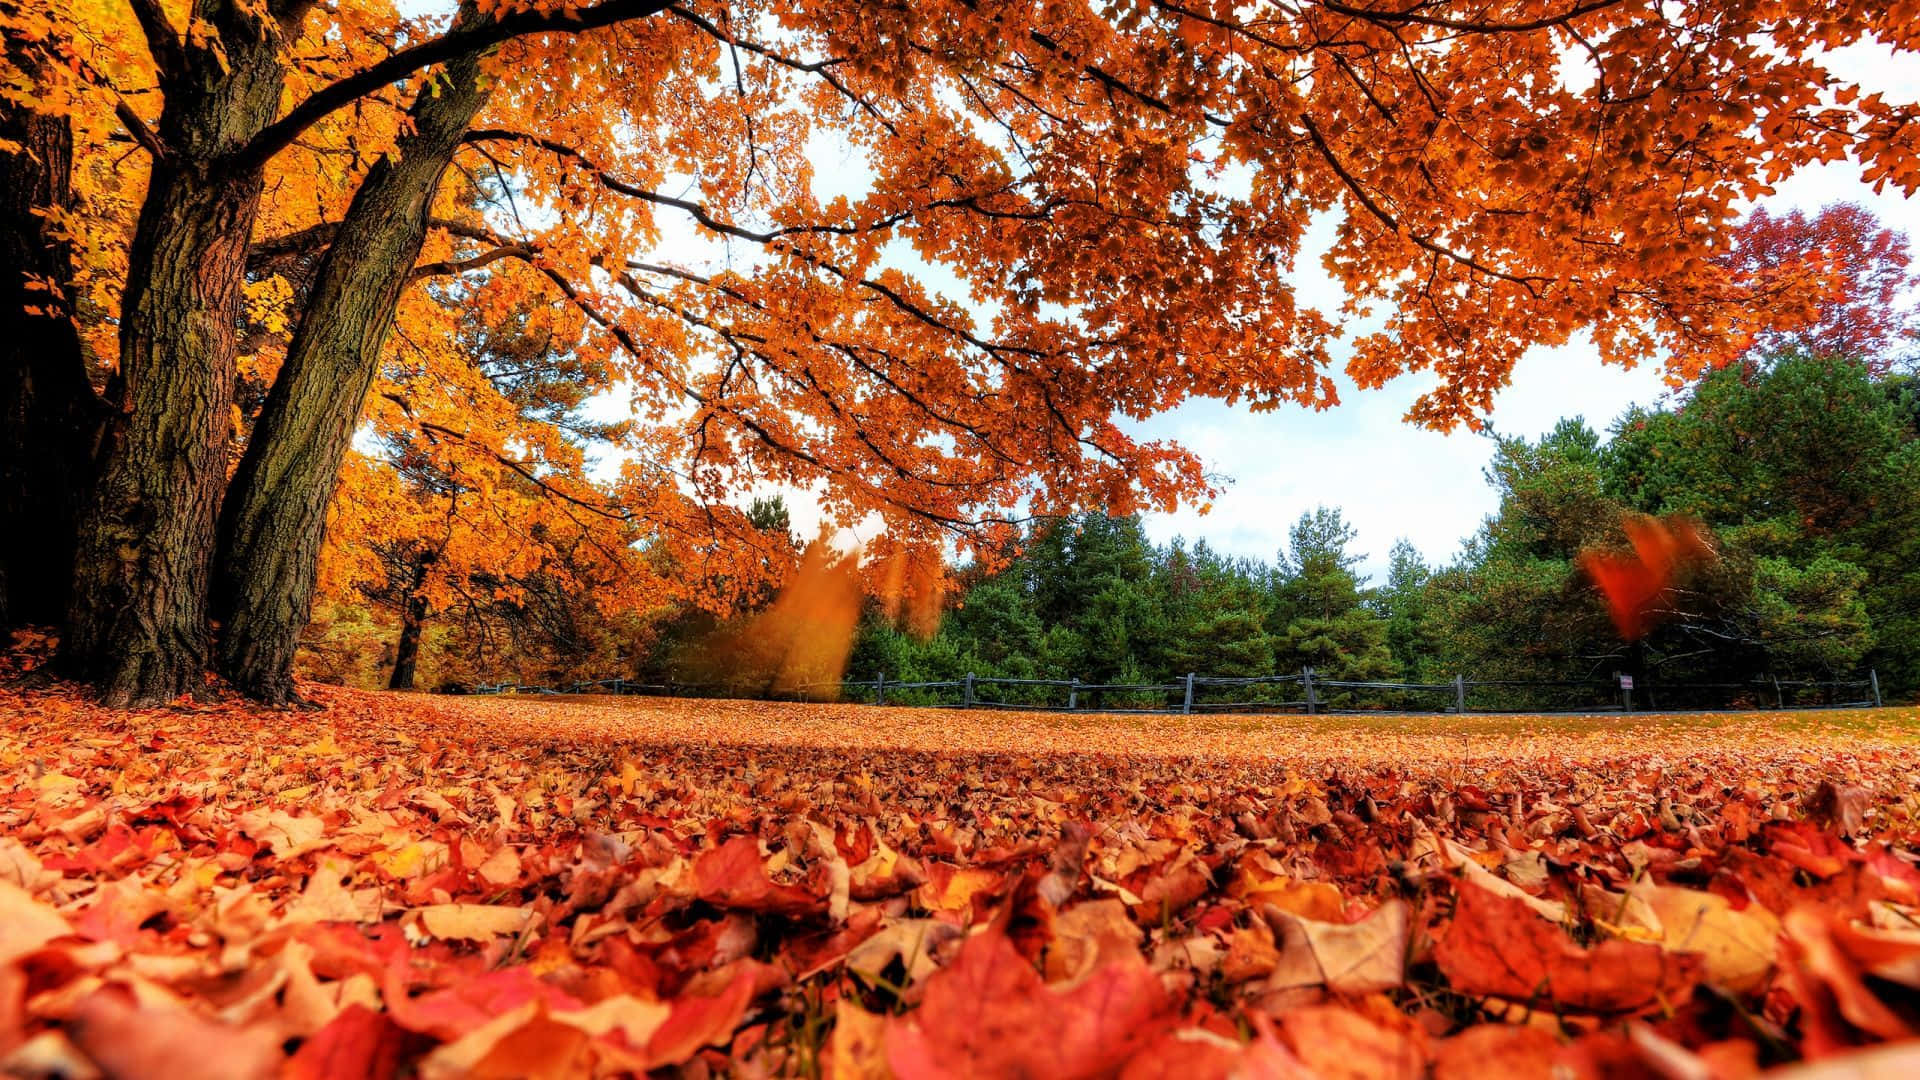 "Fallen Leaves Tell a Tale of Autumnal Beauty"